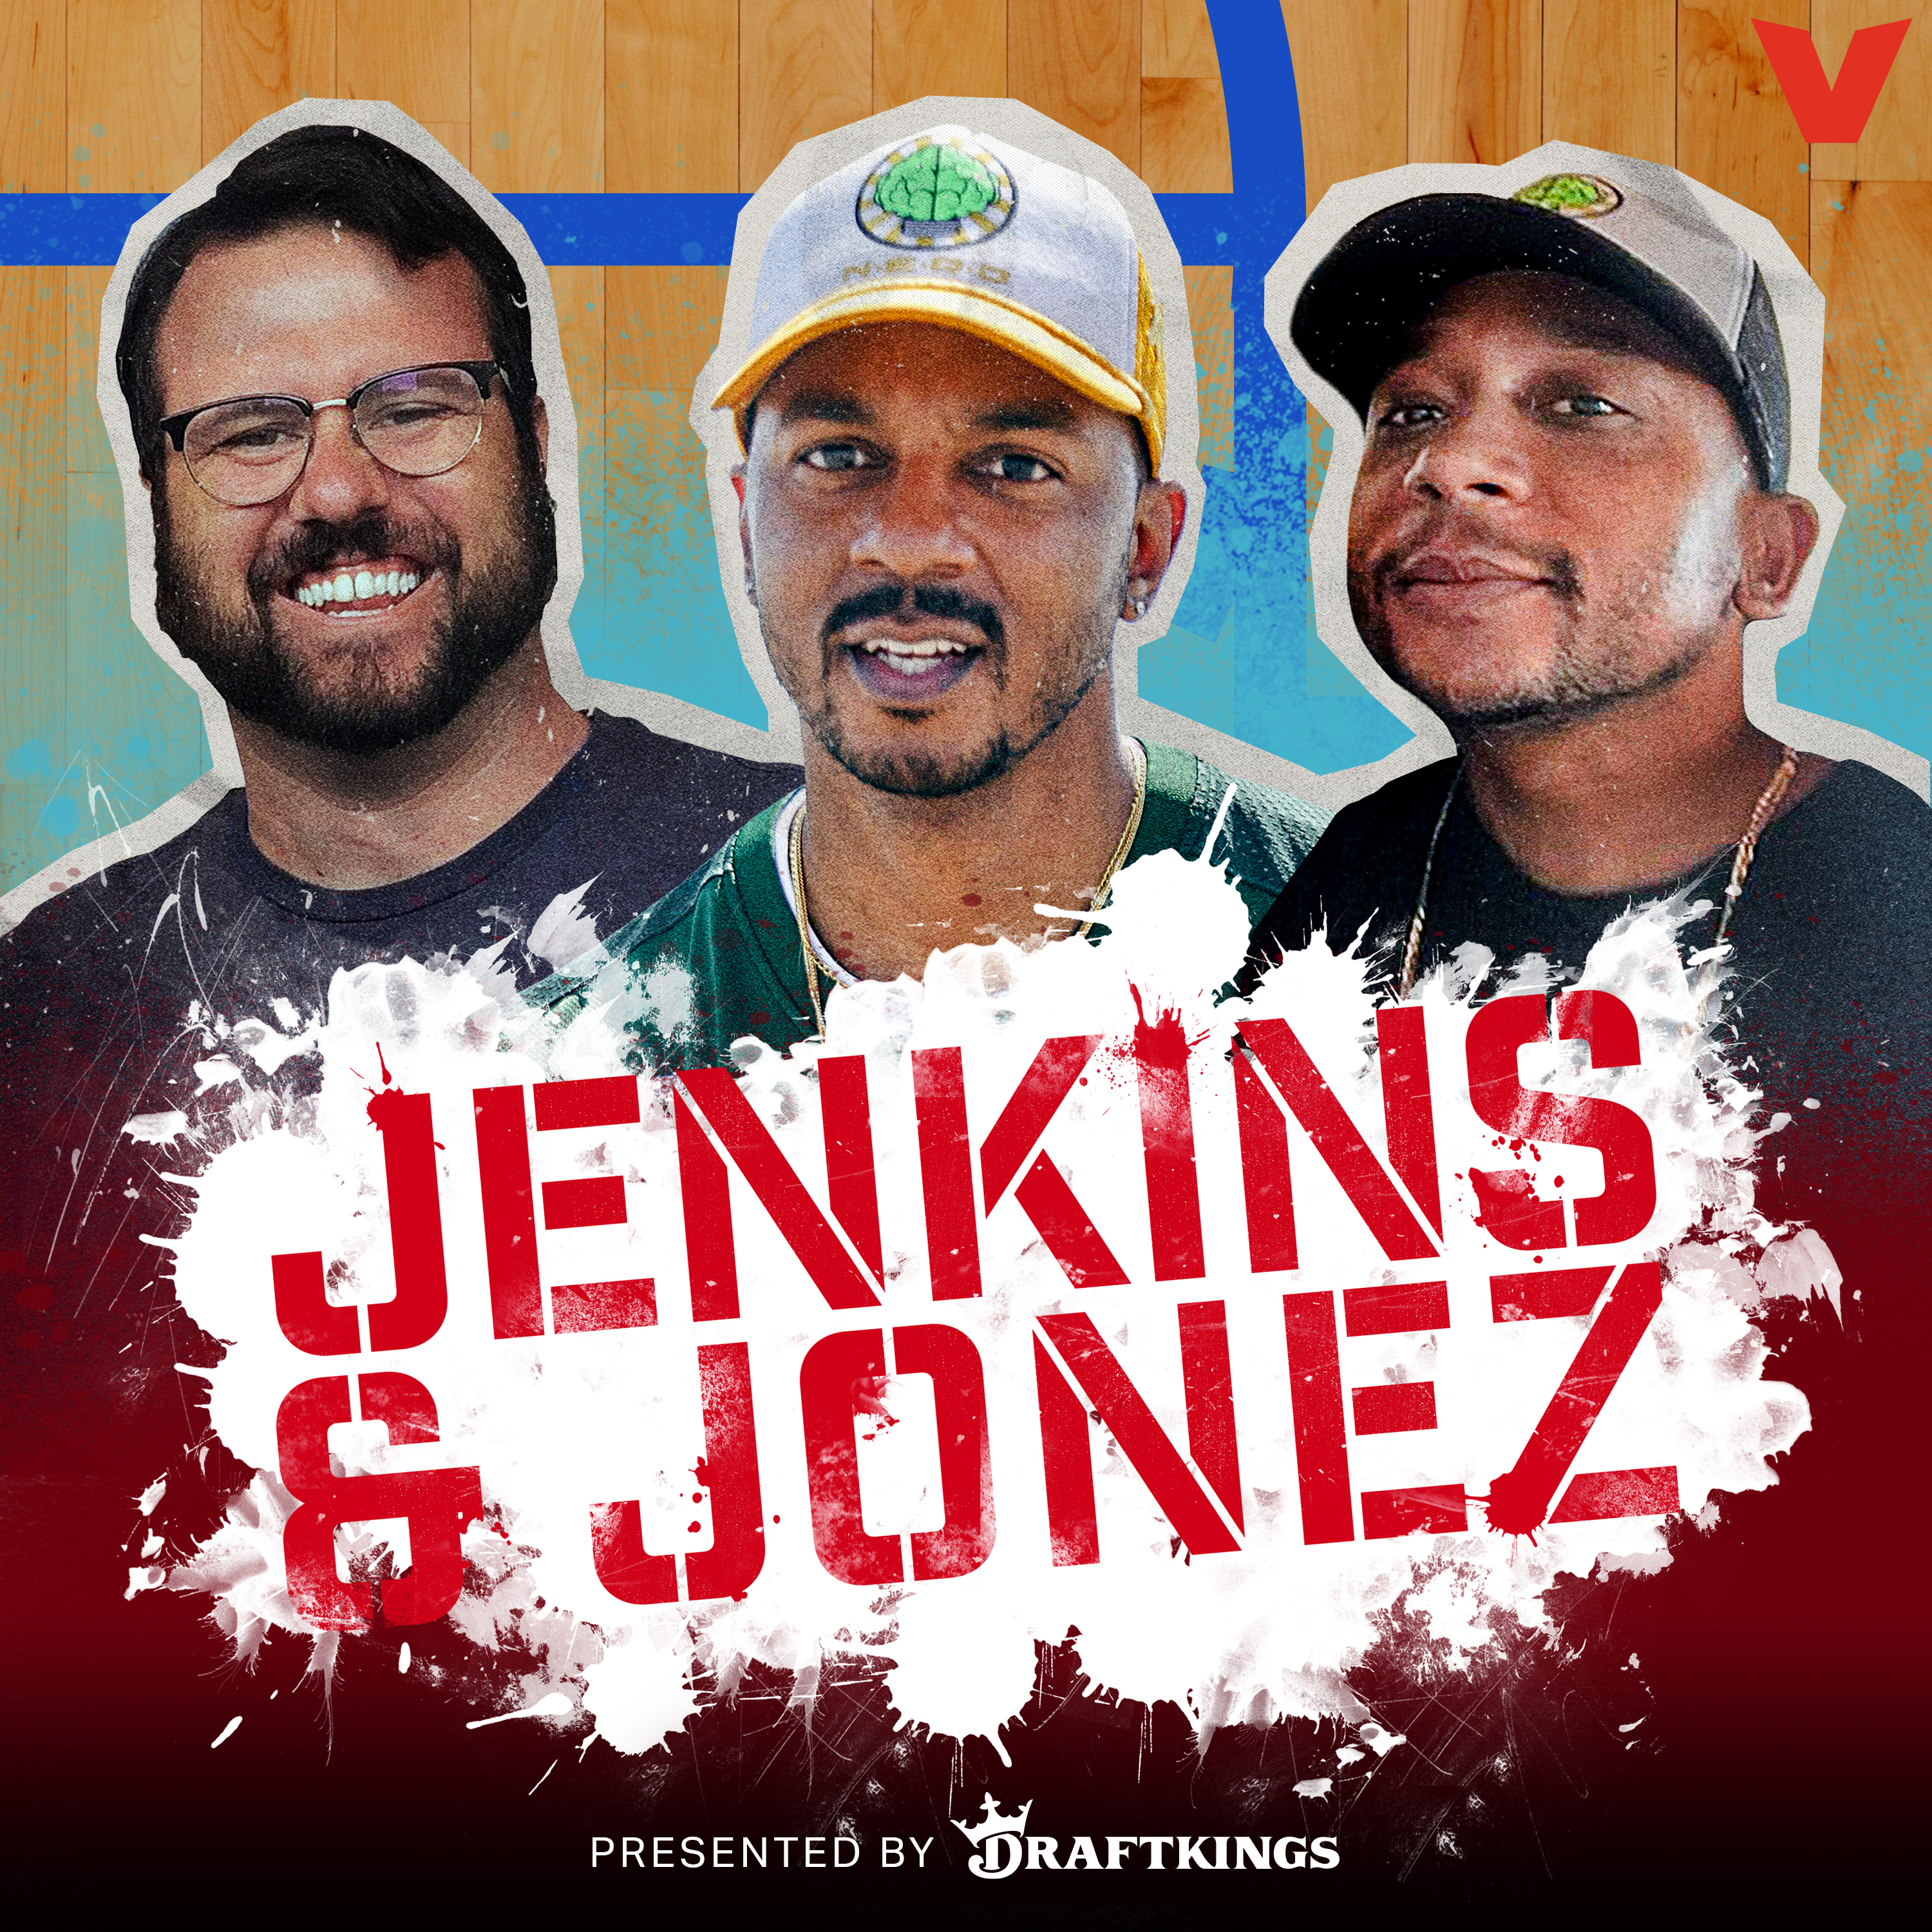 Jenkins and Jonez - Jenkins and Jonez are outta pocket